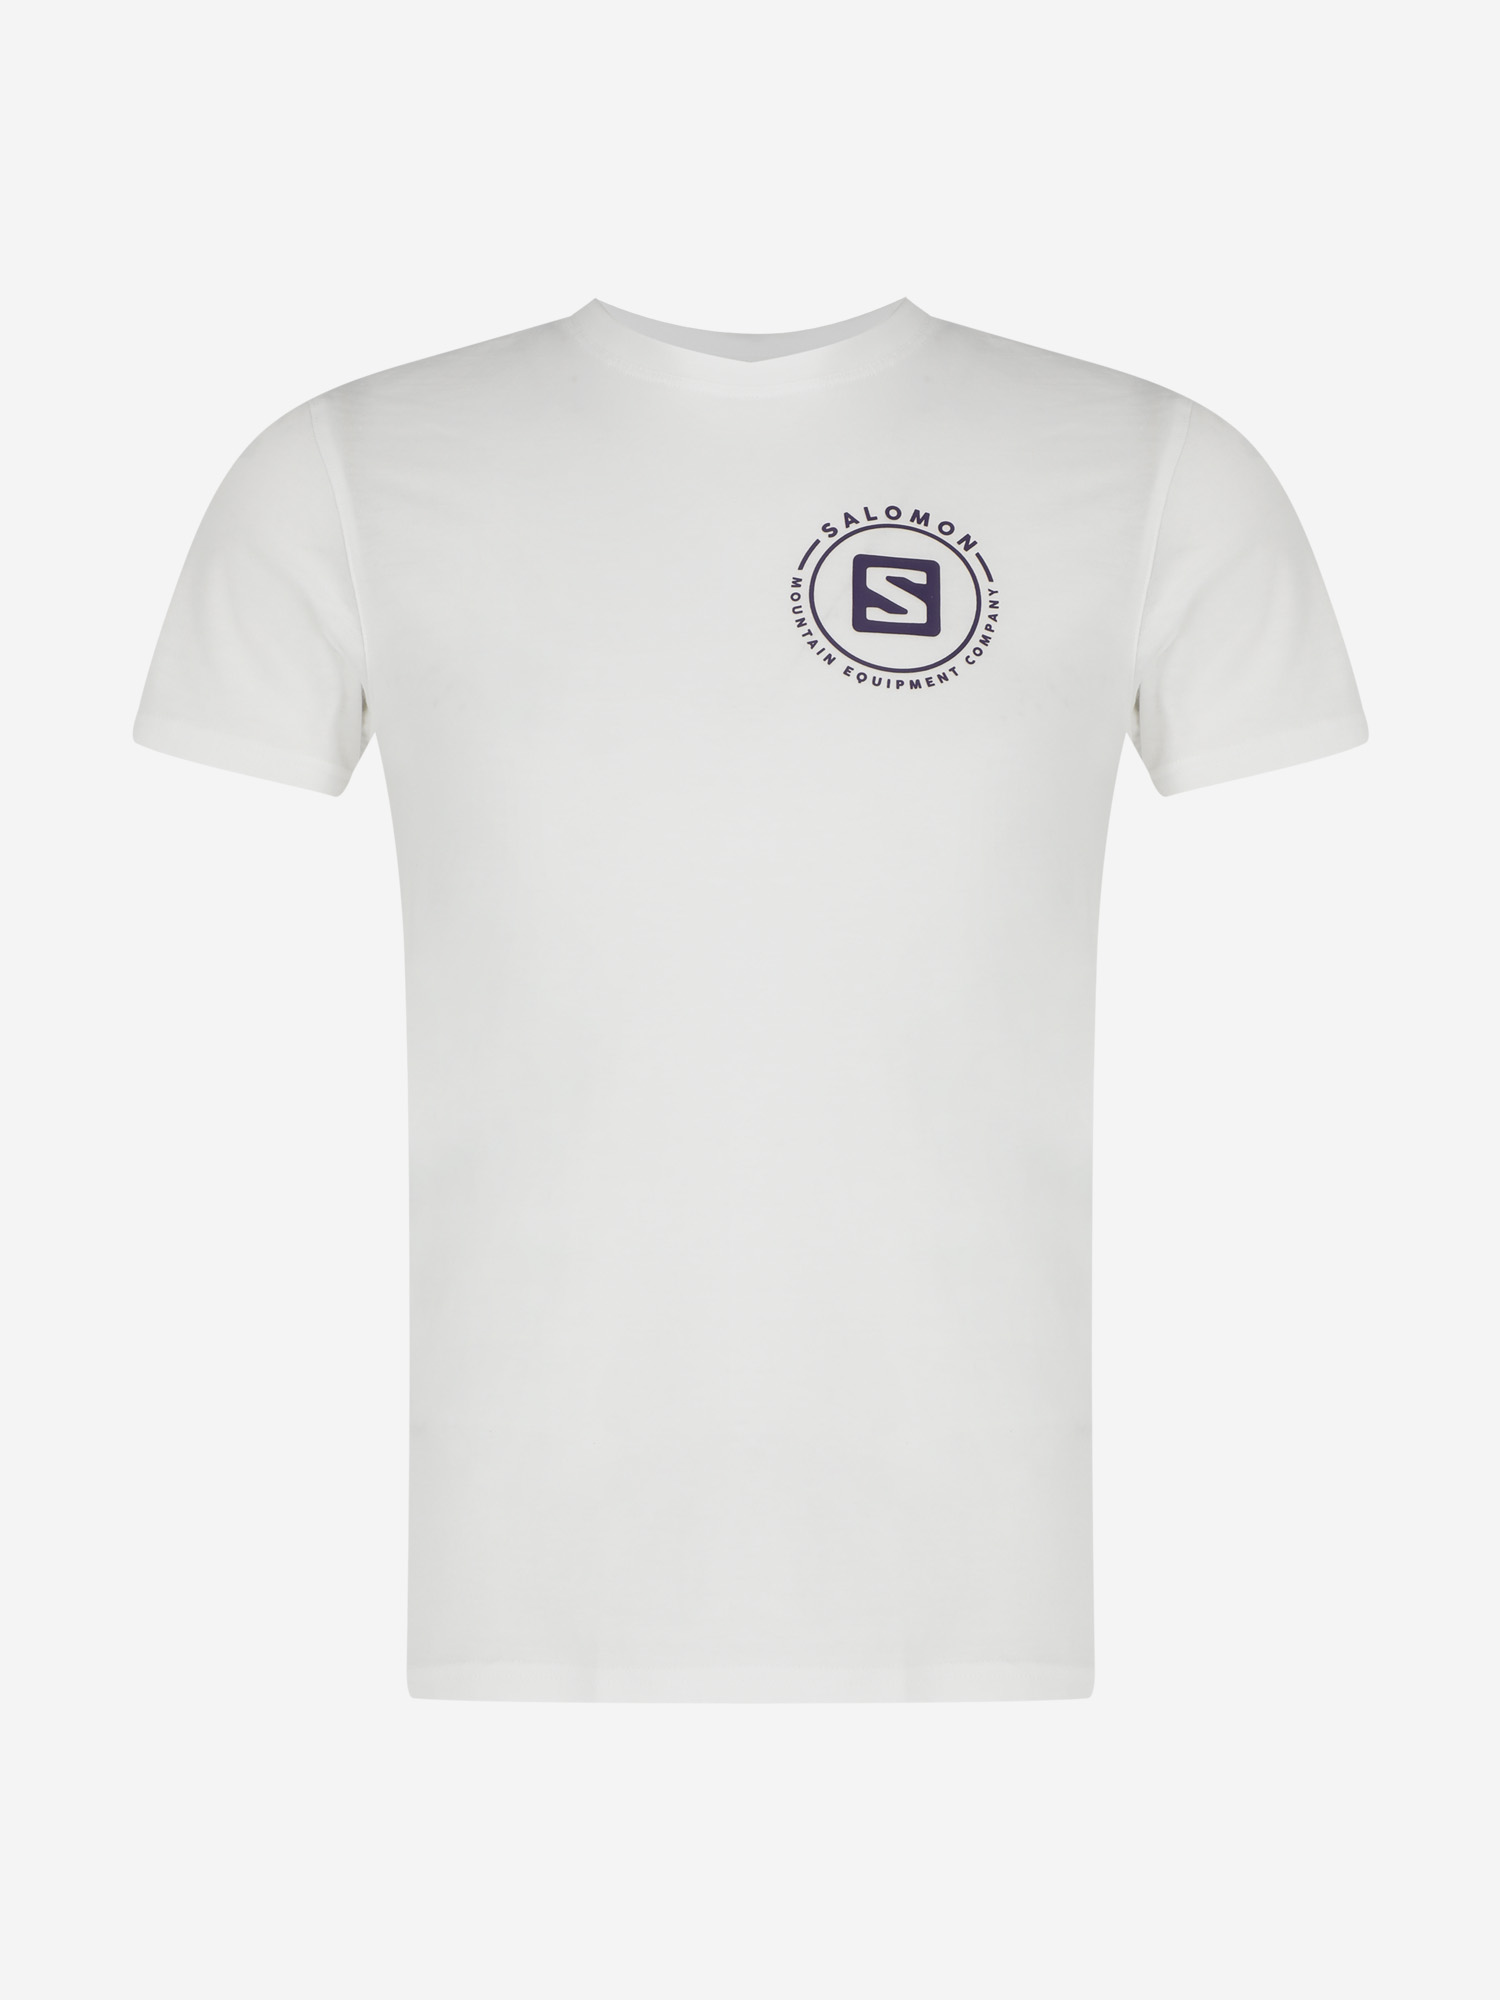 Футболка мужская Salomon Explore, Белый футболка мужская salomon essential белый